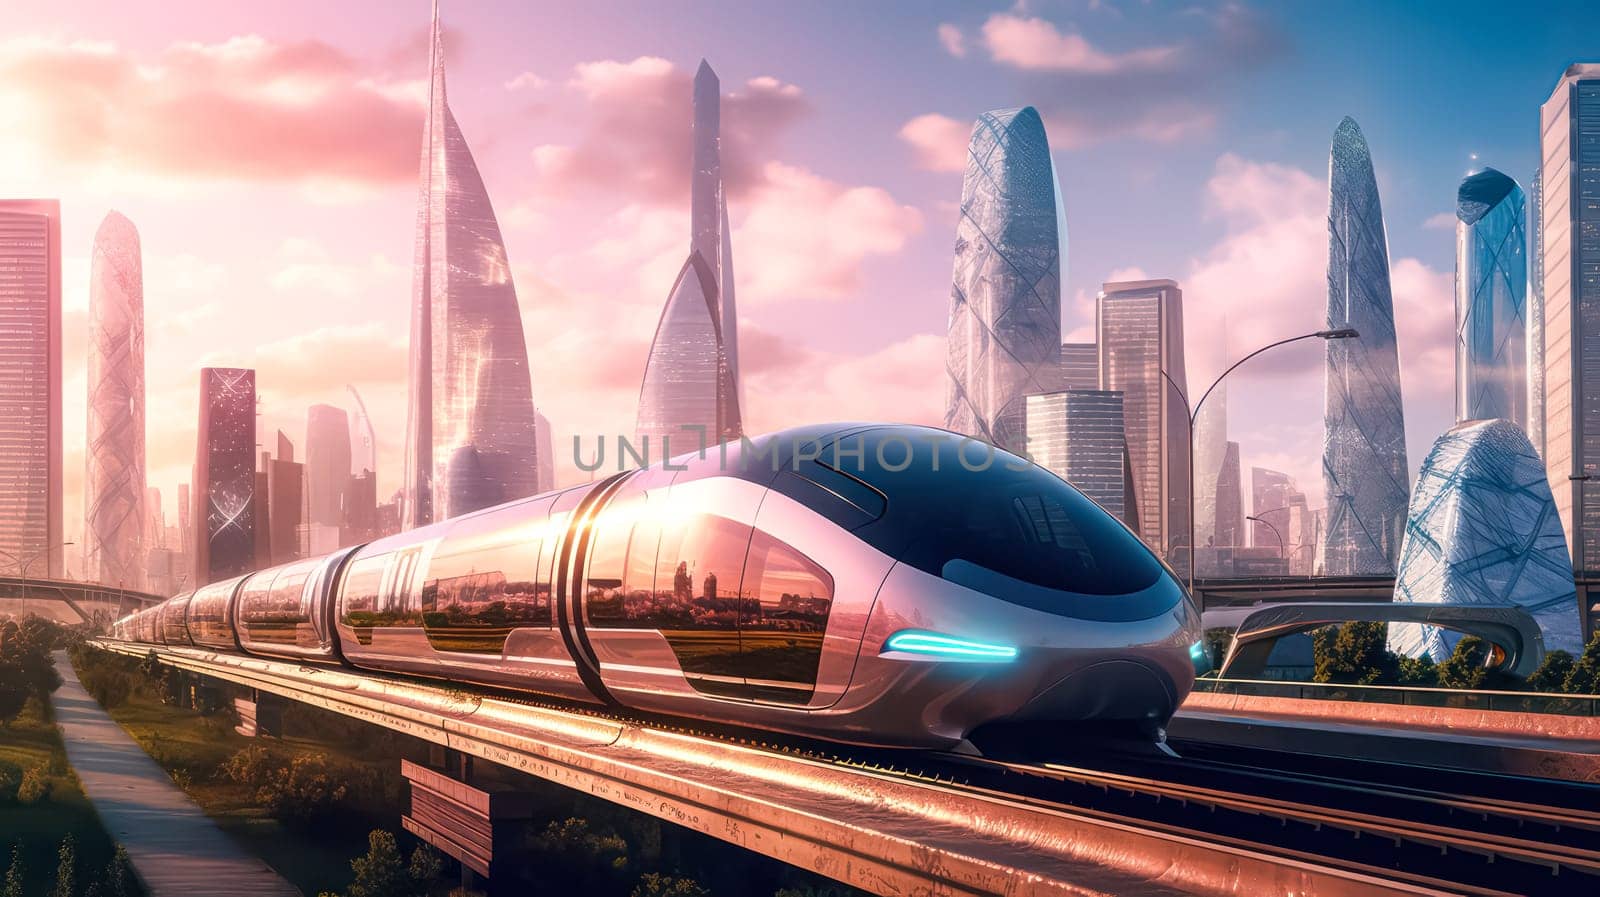 A sleek and futuristic high speed train symbolizing modernization by Alla_Morozova93